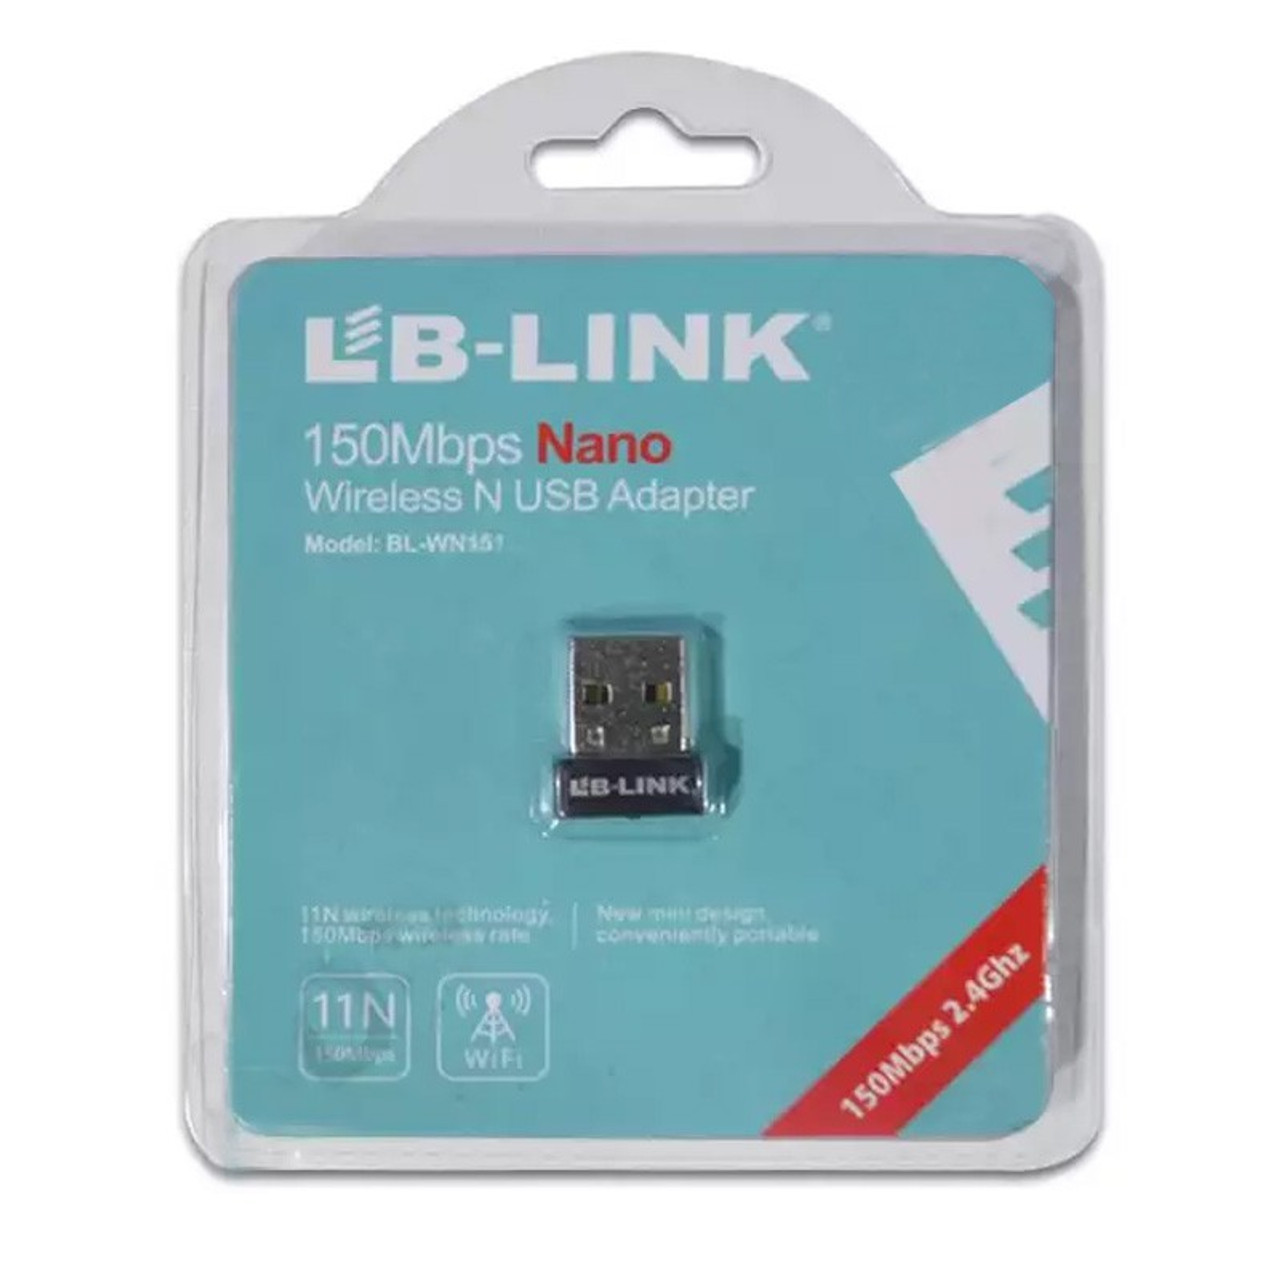 CARD LAN USB2.0 WIRELESS-N  LB-LINK  150N   NANO ,Wirless & Switch